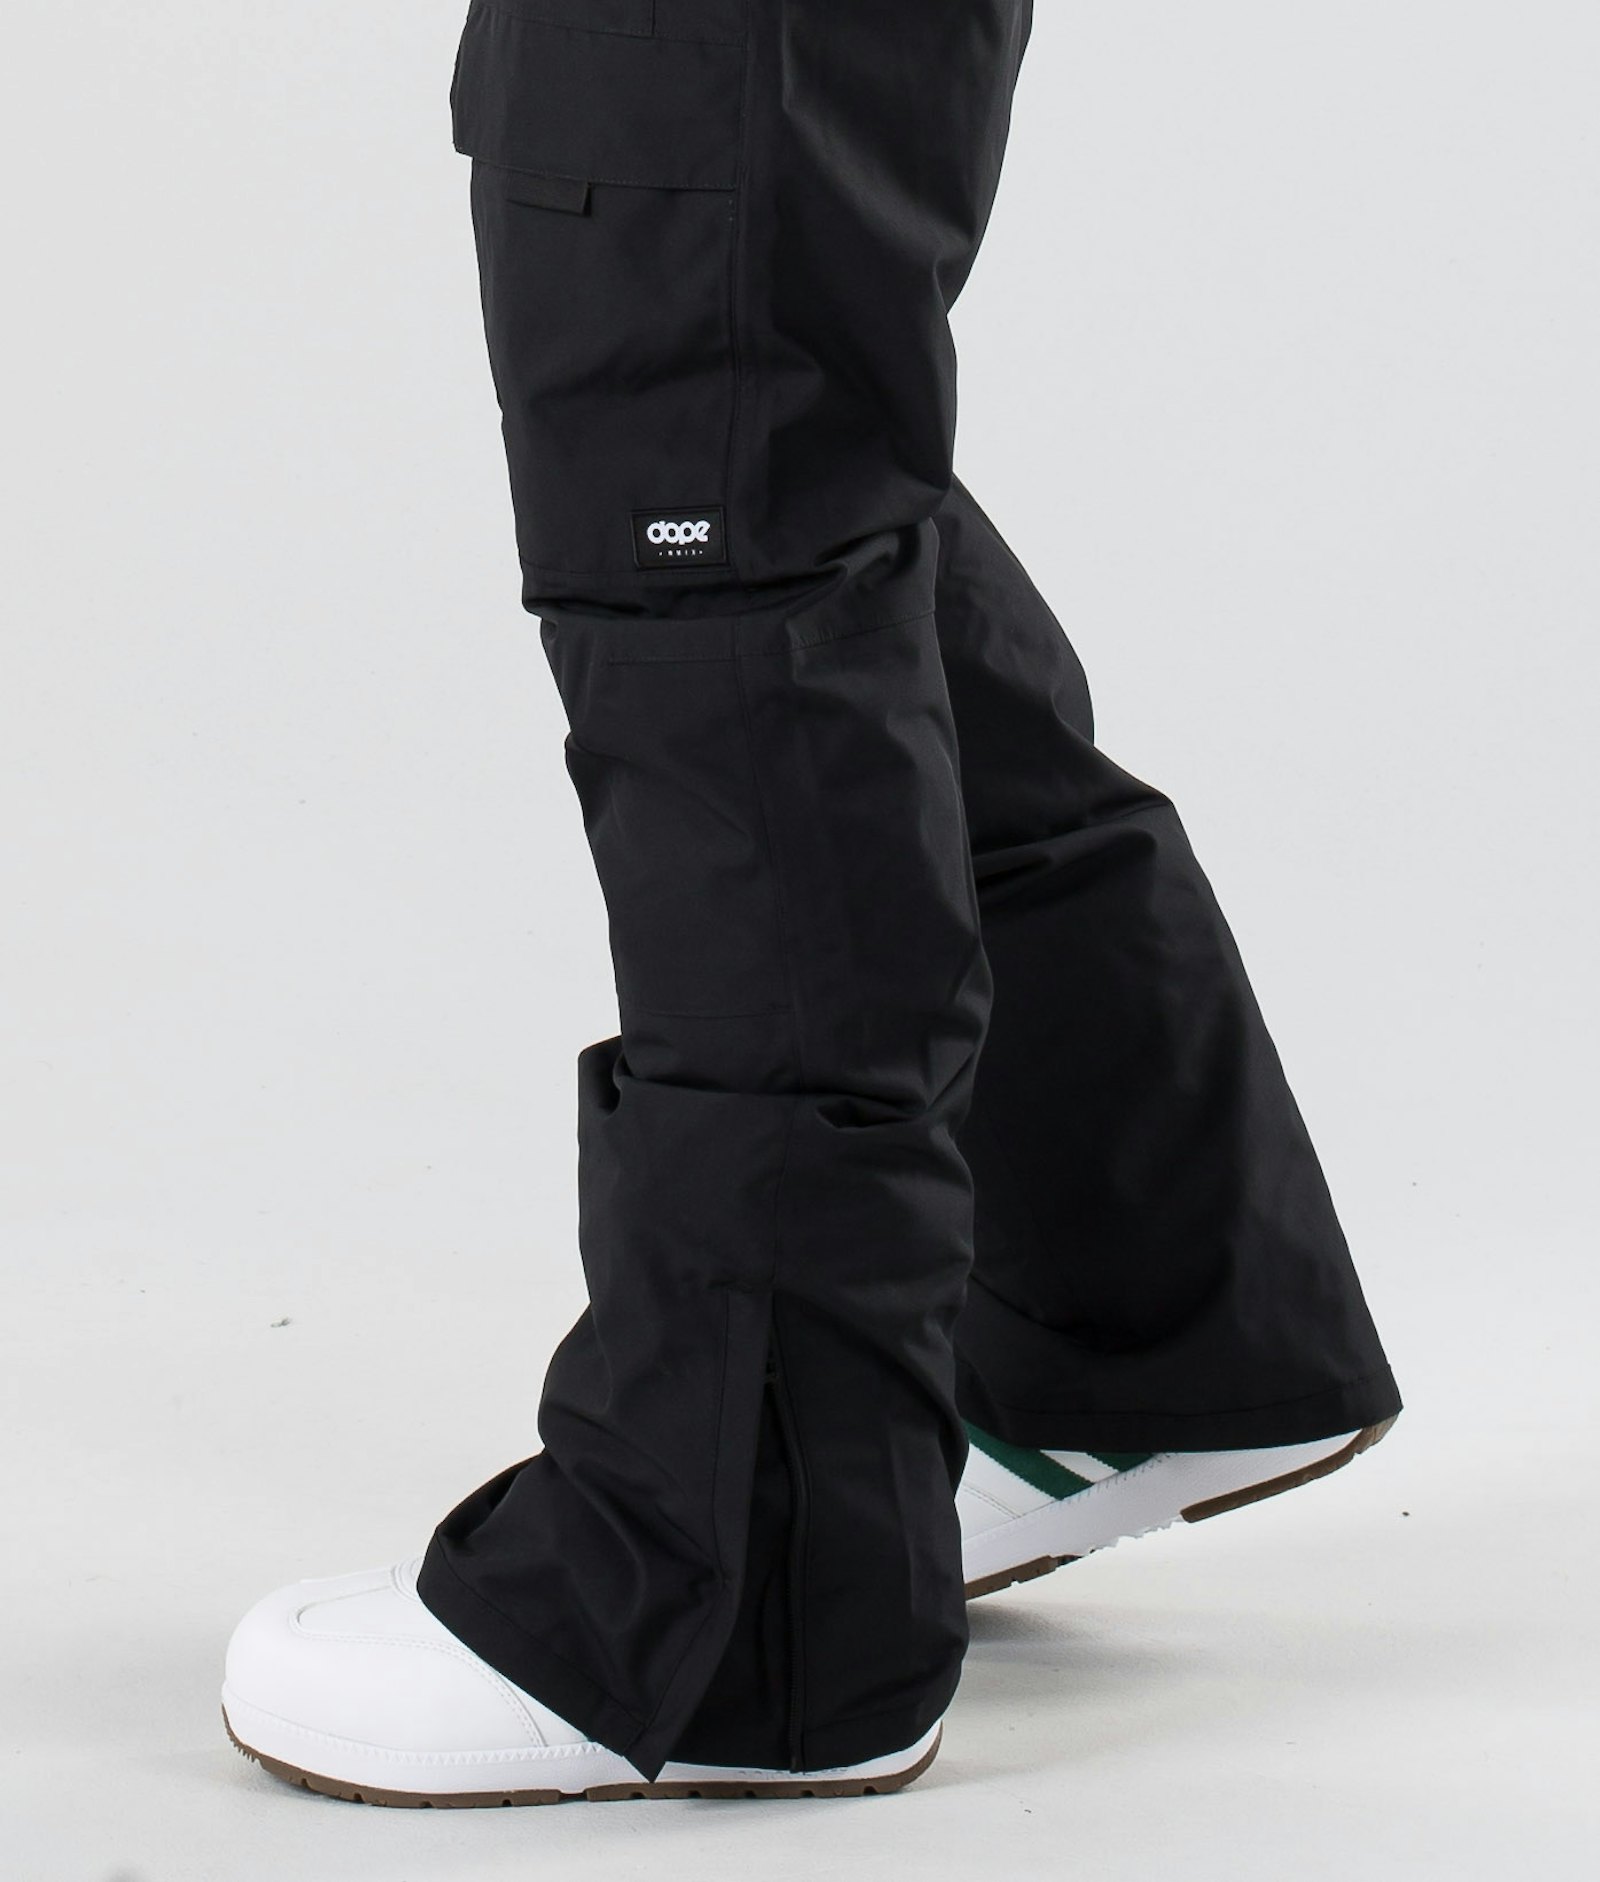 Dope Poise 2019 Pantalones Snowboard Hombre Black